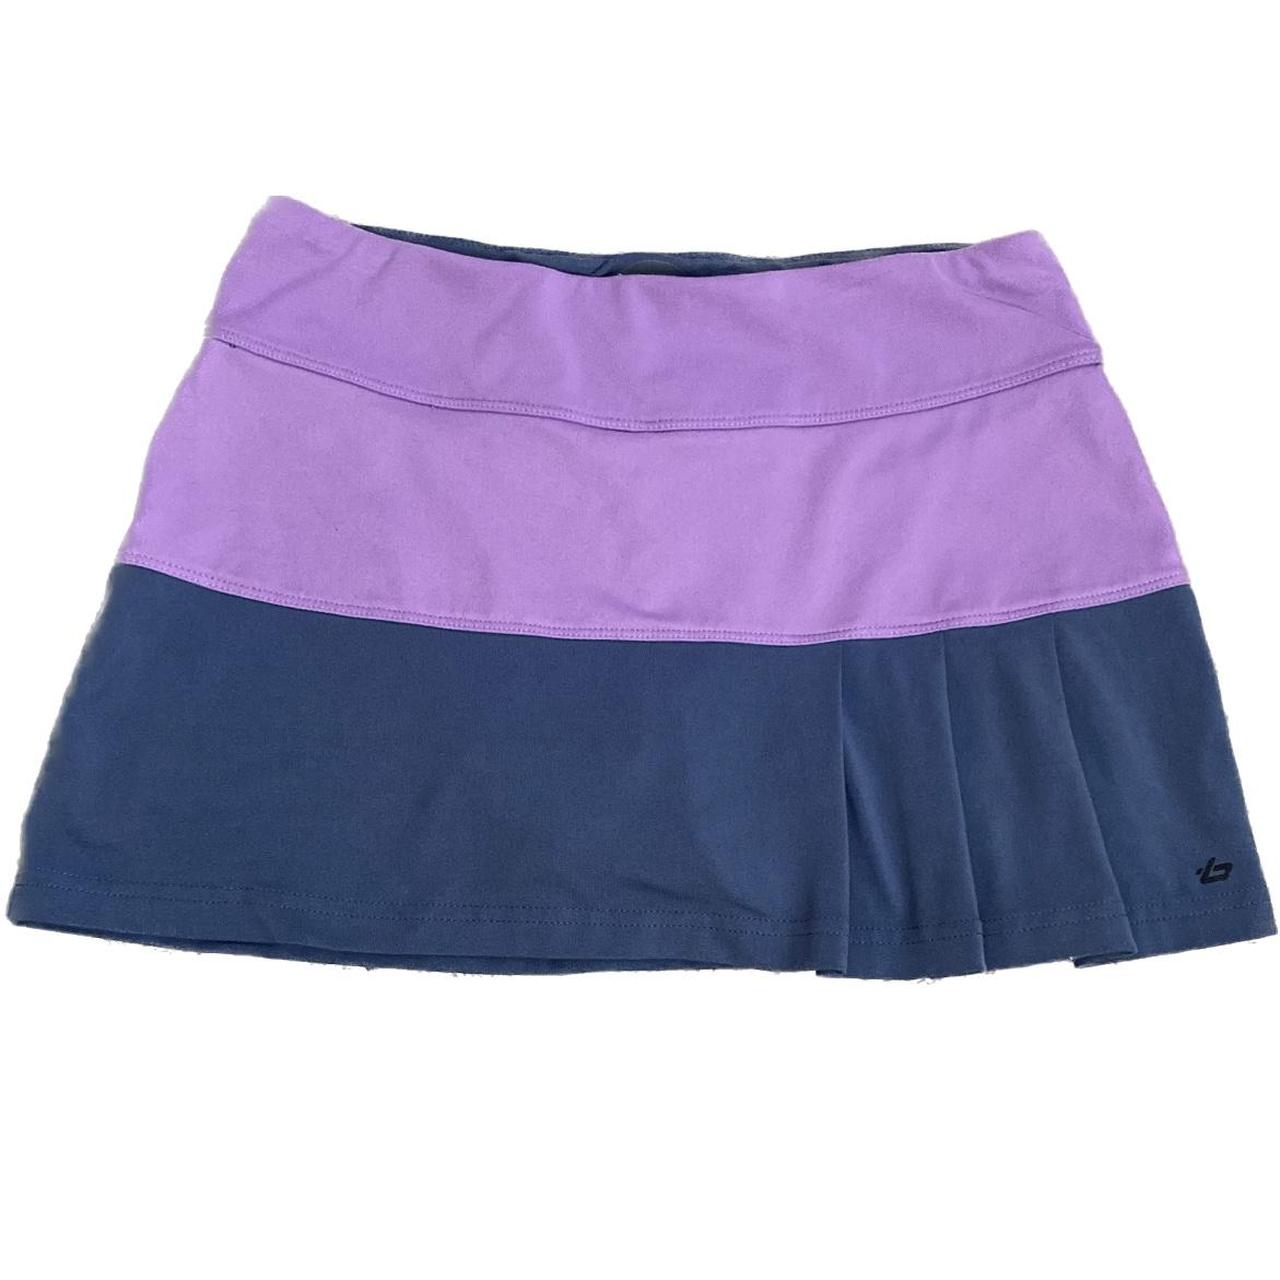 Bollé Women's Purple and Grey Skirt (5)